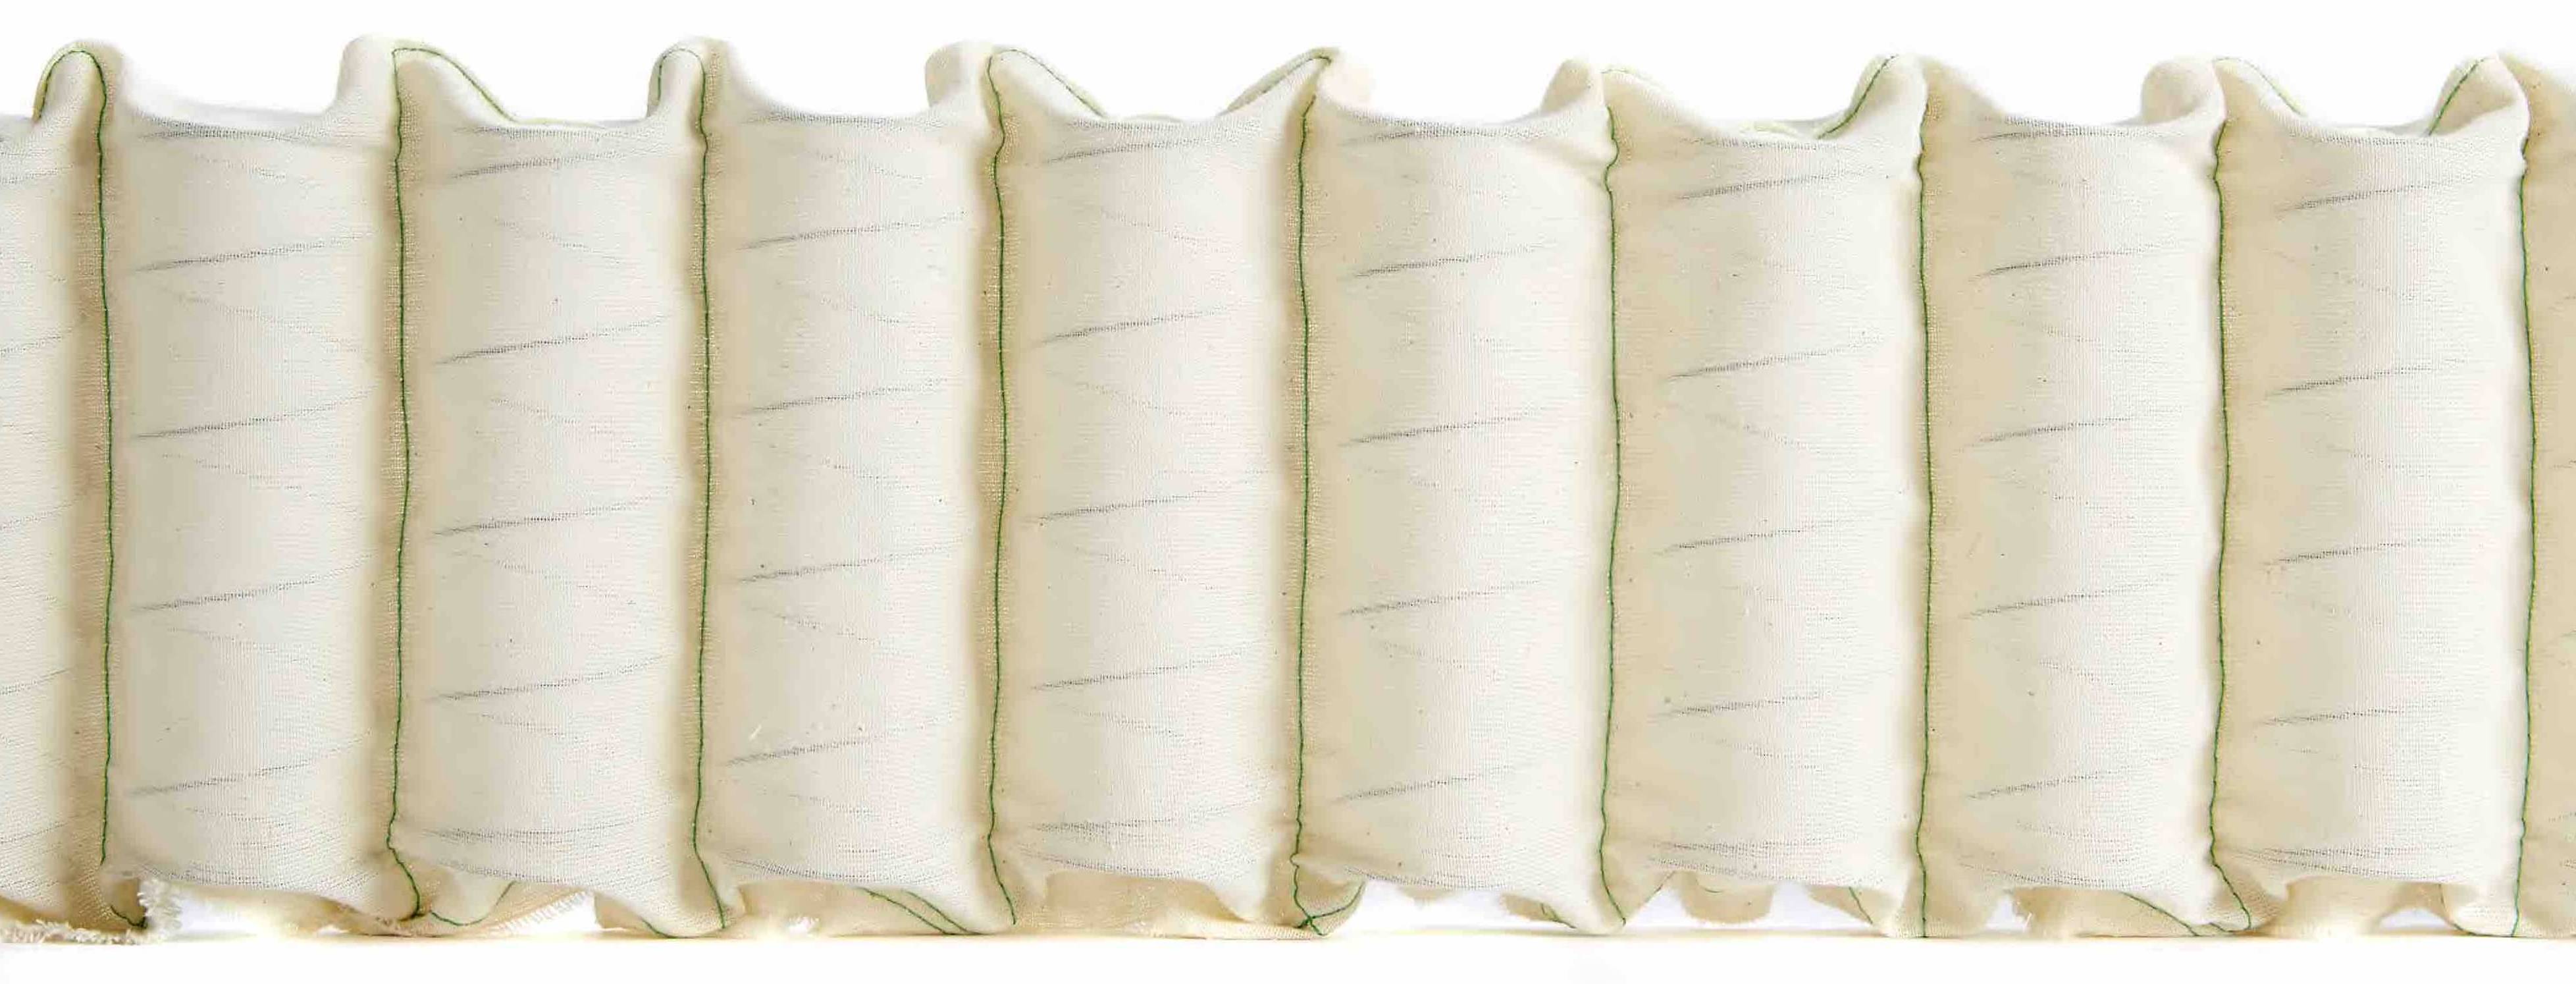 Calico soft mattress pocket springs